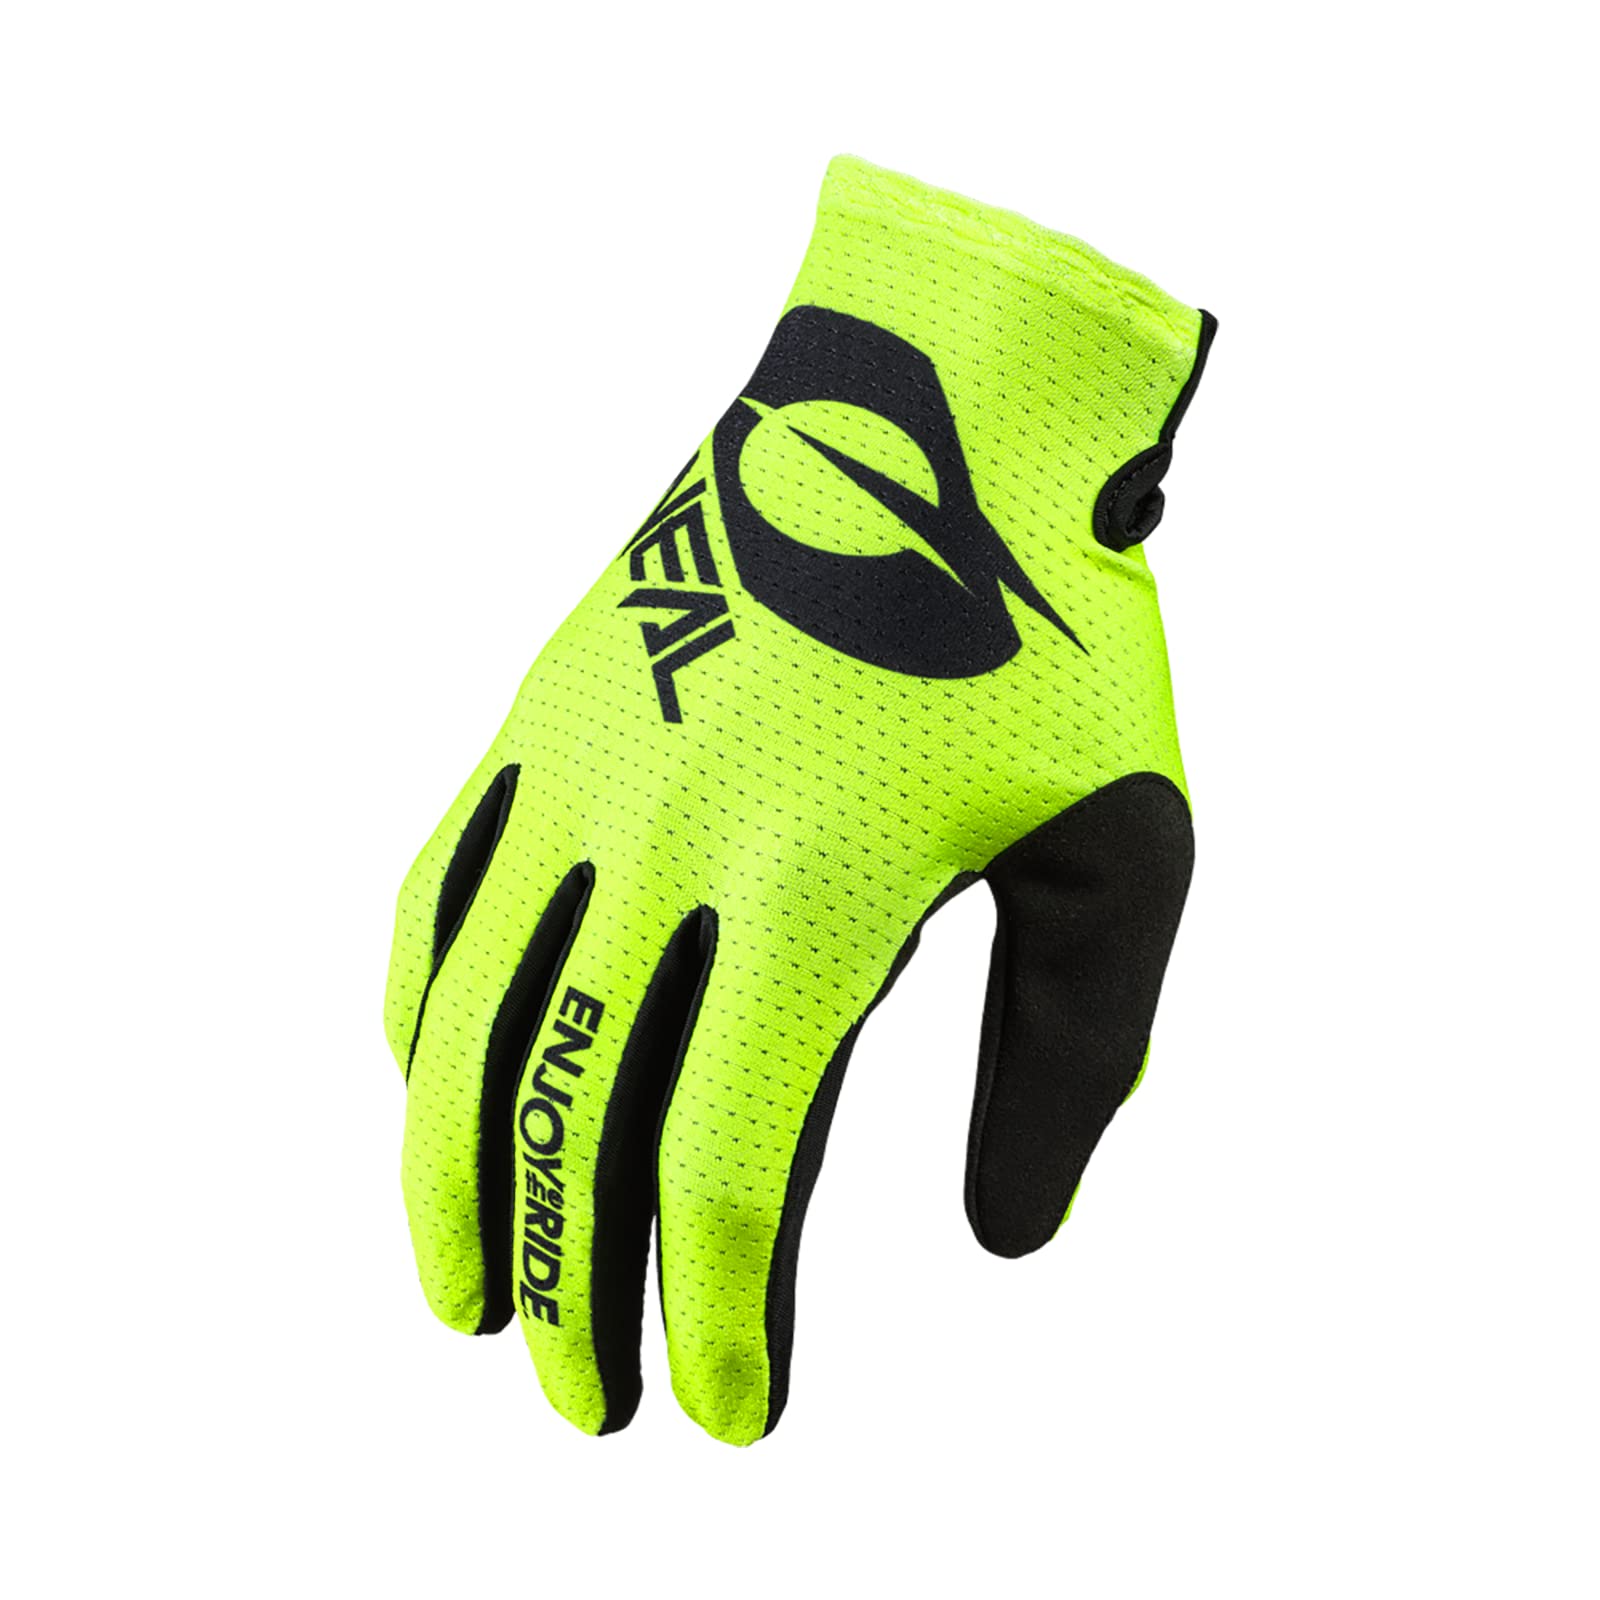 O'NEAL | Fahrrad- & Motocross-Handschuhe | MX MTB DH FR Downhill Freeride | Langlebige, Flexible Materialien, belüftete Handoberseite | Matrix Glove | Erwachsene | Schwarz Neon-Gelb | Größe S von O'NEAL